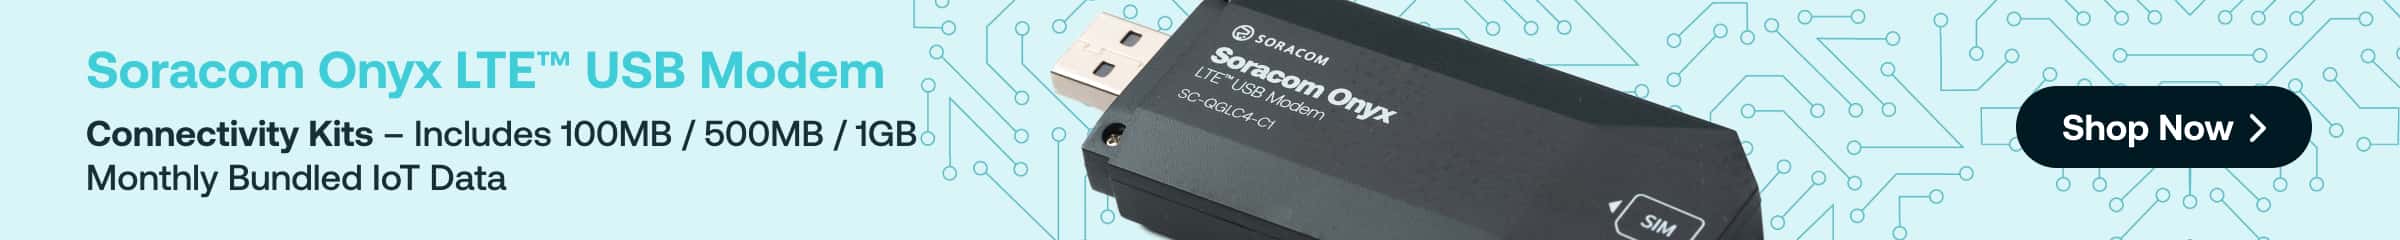 Soracom Onyx Connectivity Kits - Shop Now